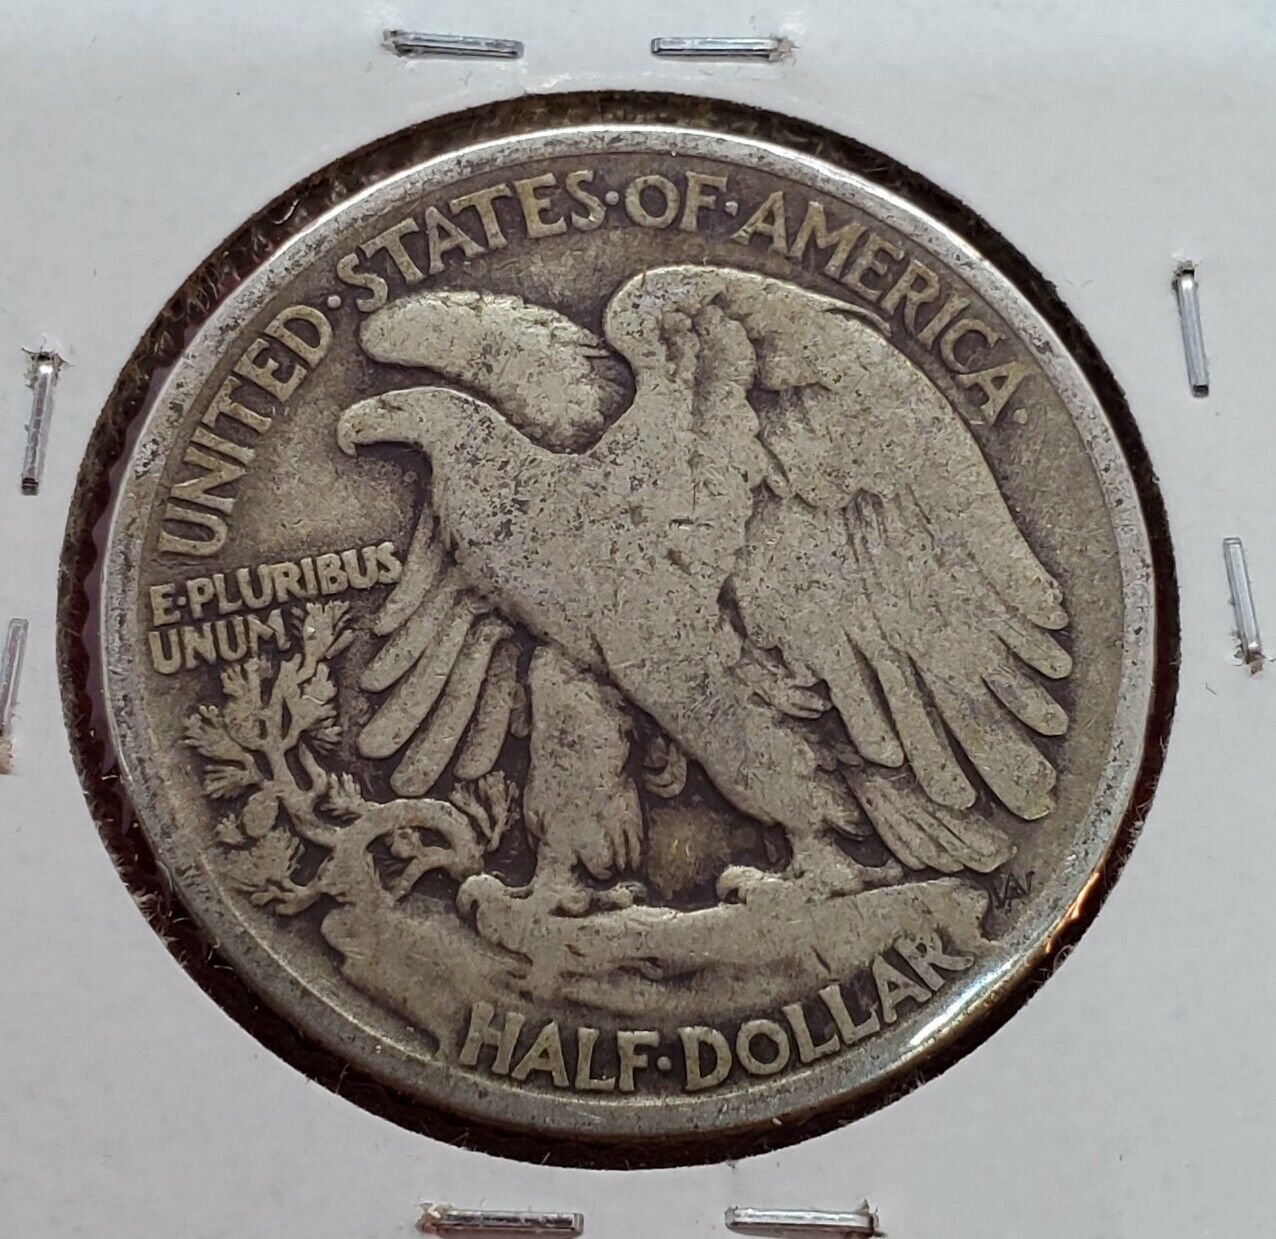 1917 P Walking Liberty Silver Eagle Half Dollar Coin Choice VG Very Good Circ